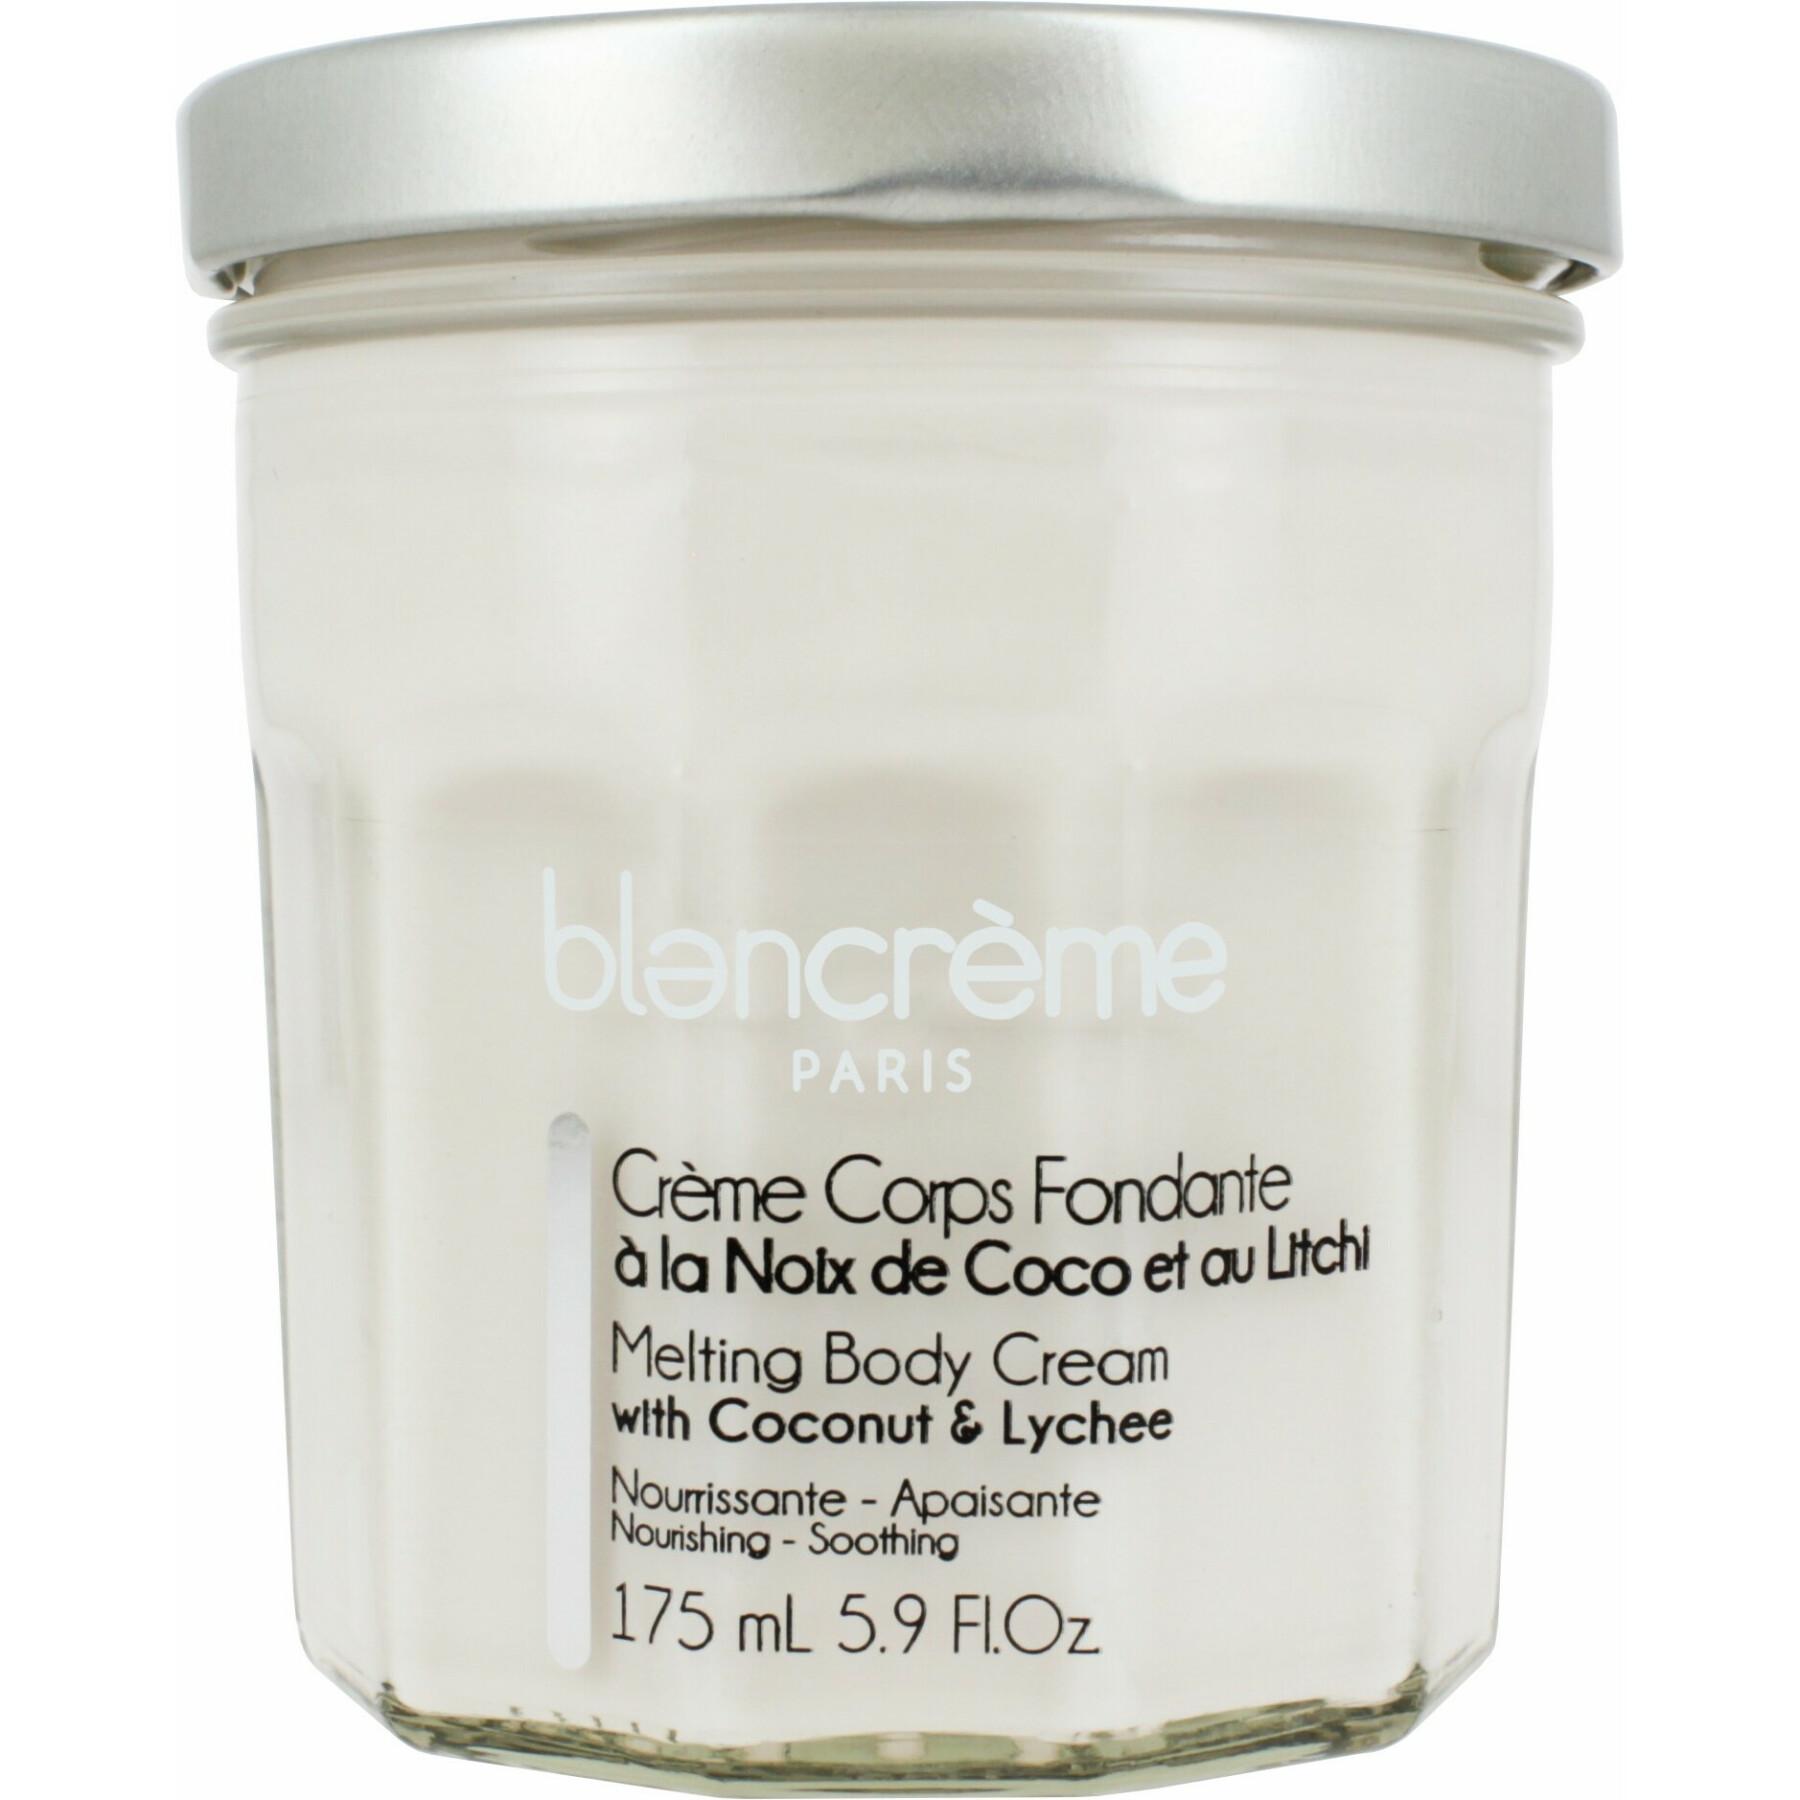 Body cream - coconut & lychee - Blancreme 175 ml